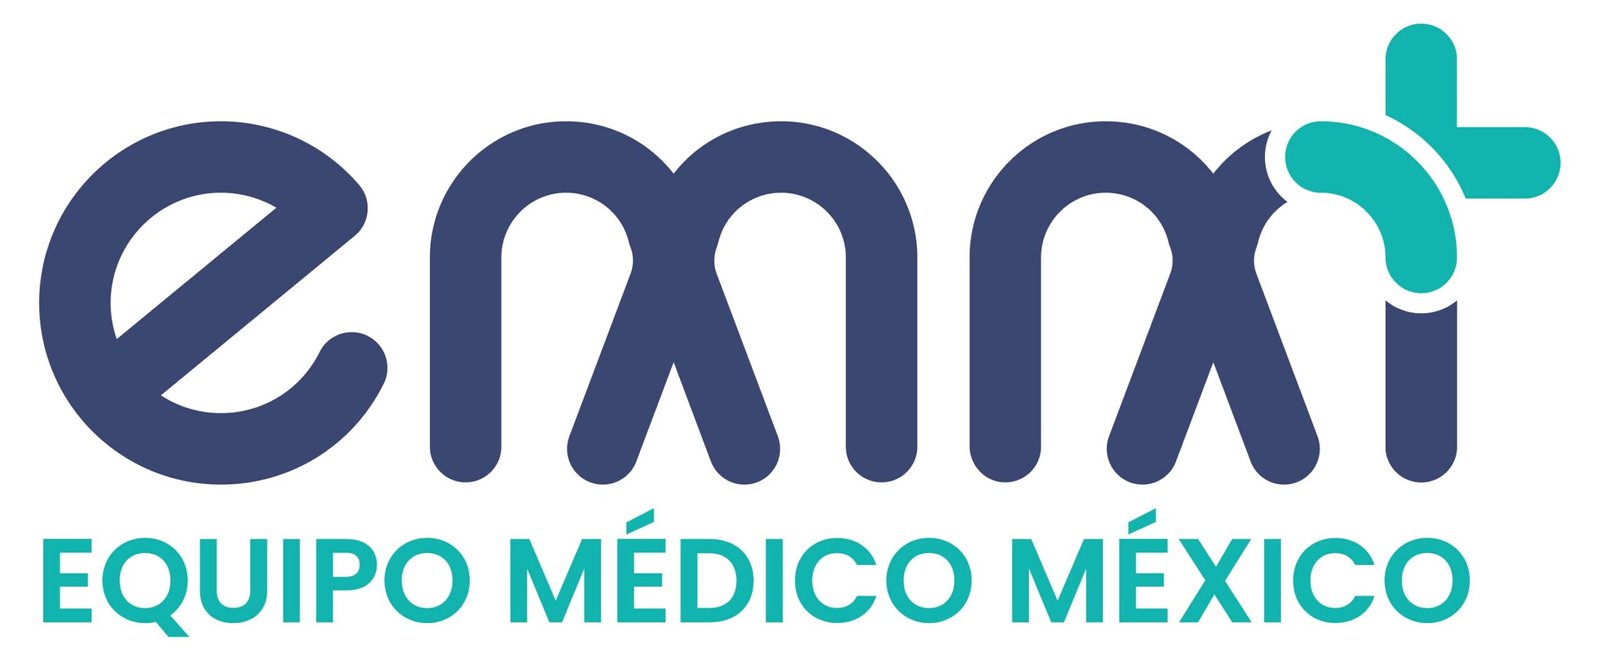  Tu mejor opción Equipo Médico México